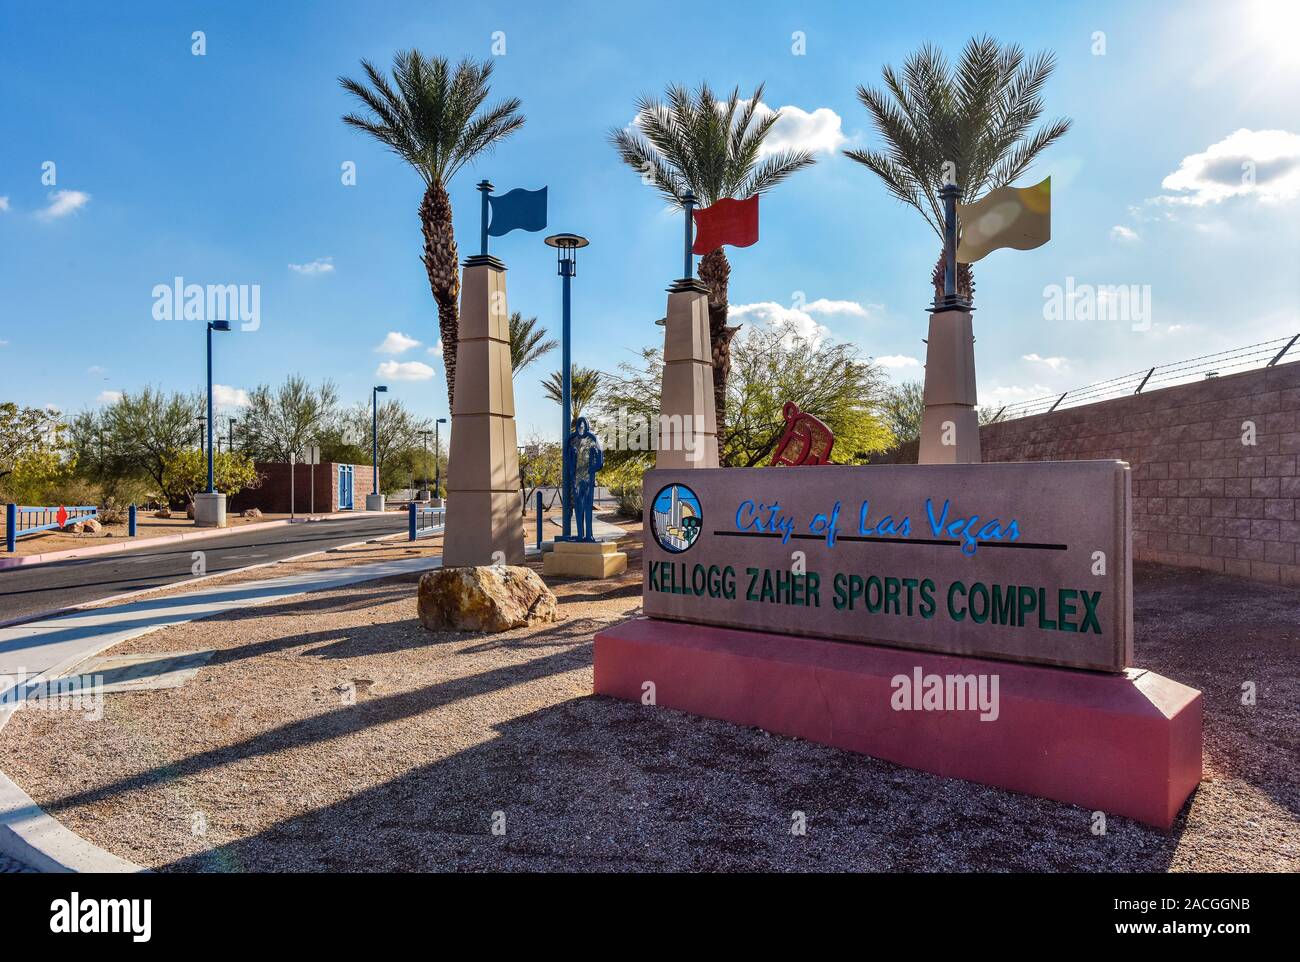 Kellogg Zaher Sports Complex Park, City of Las Vegas, Nevada Stock Photo